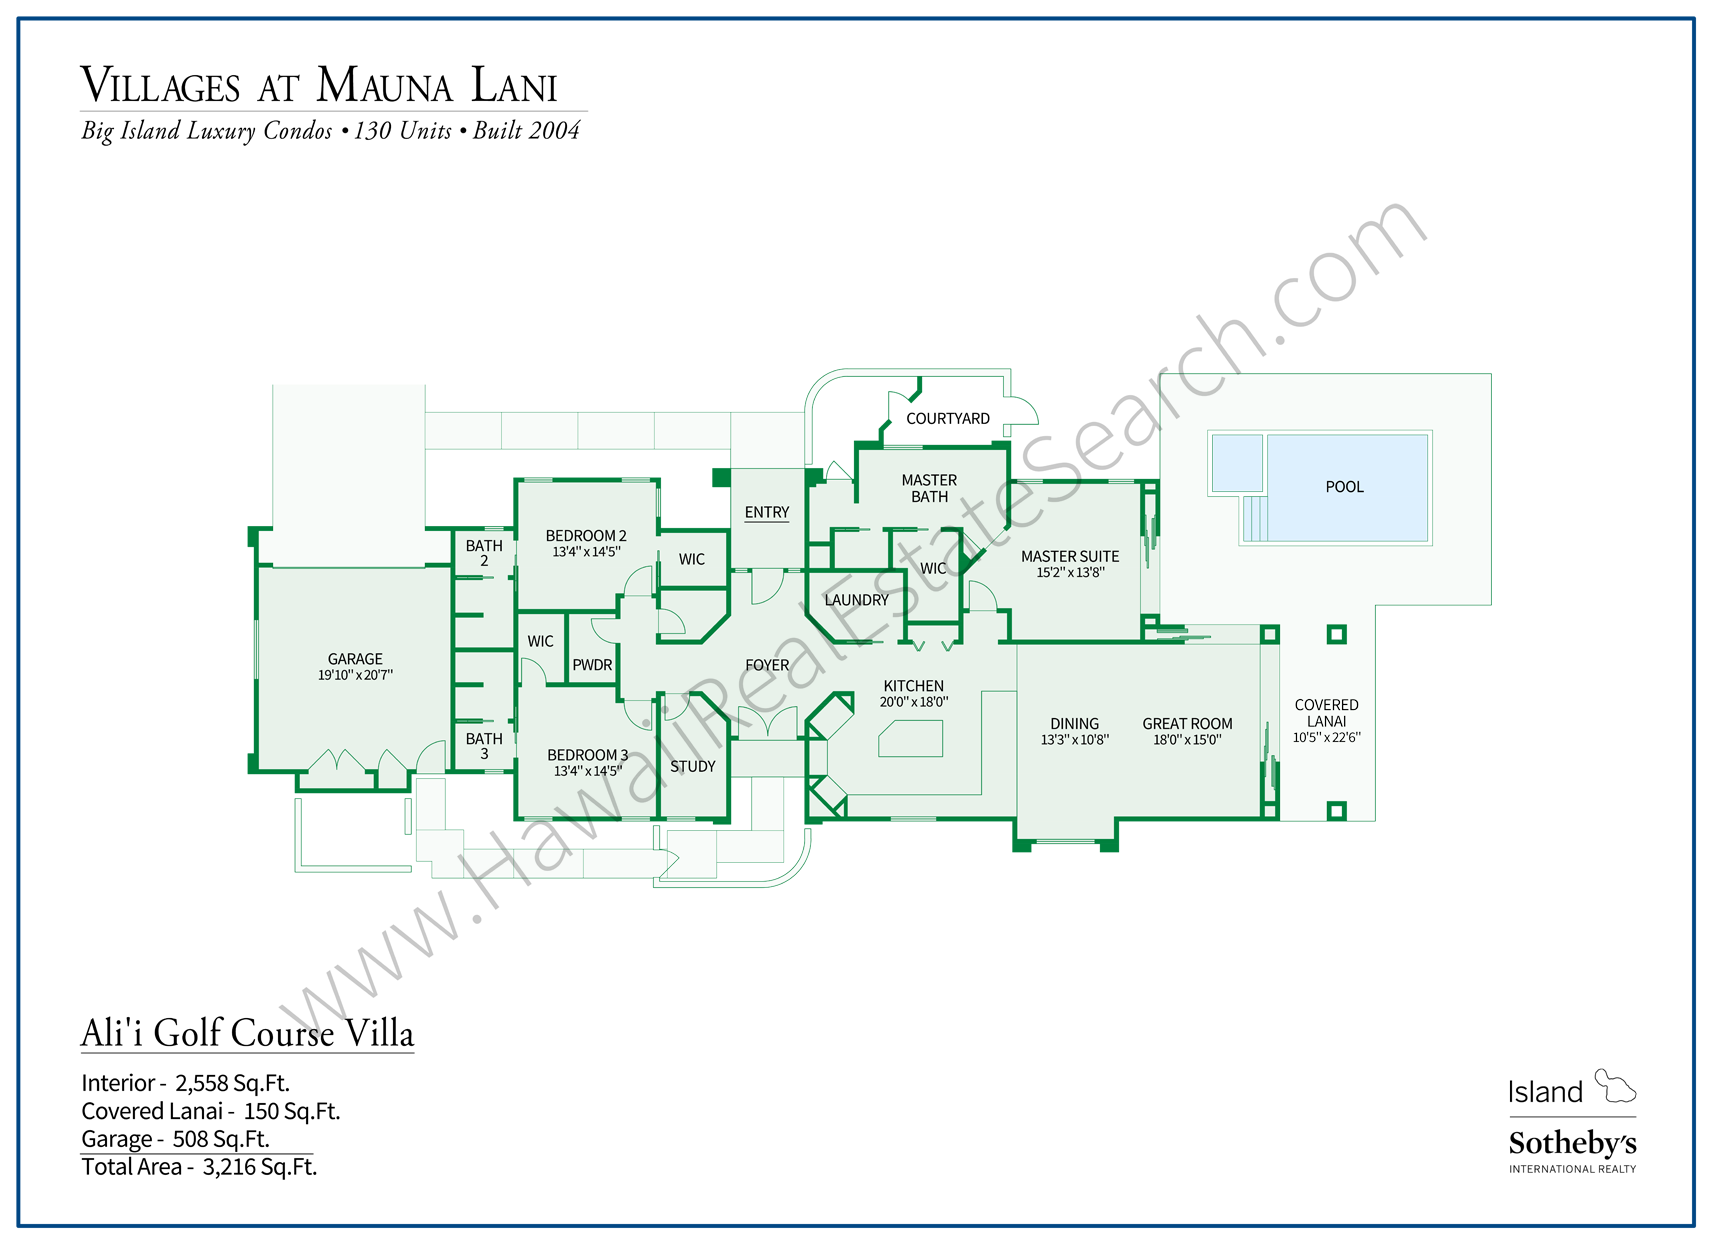 Villages at Mauna Lani Floor Plan 1